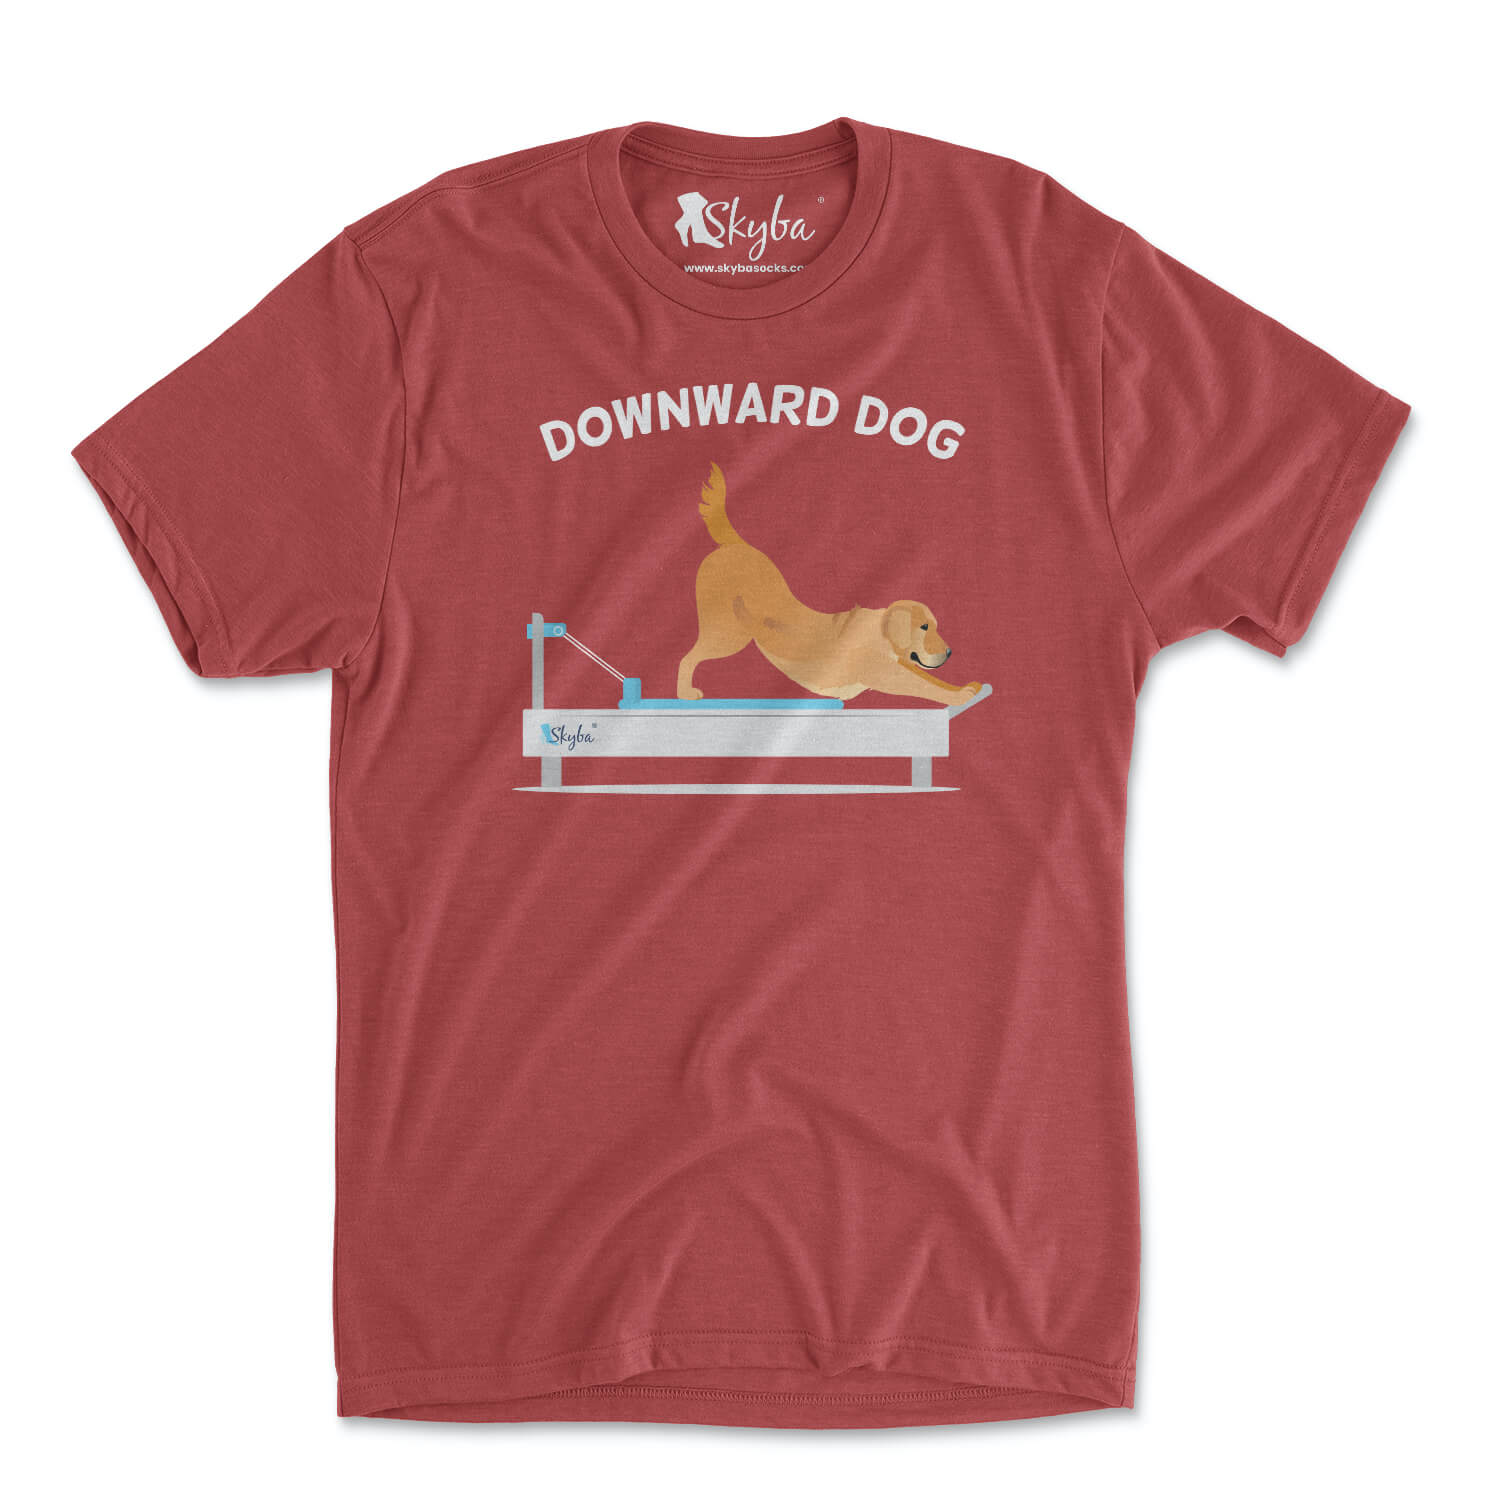 "Downward Dog" Golden Retriever on Reformer - Tri Blend Tee Skyba Tri-Blend Tee